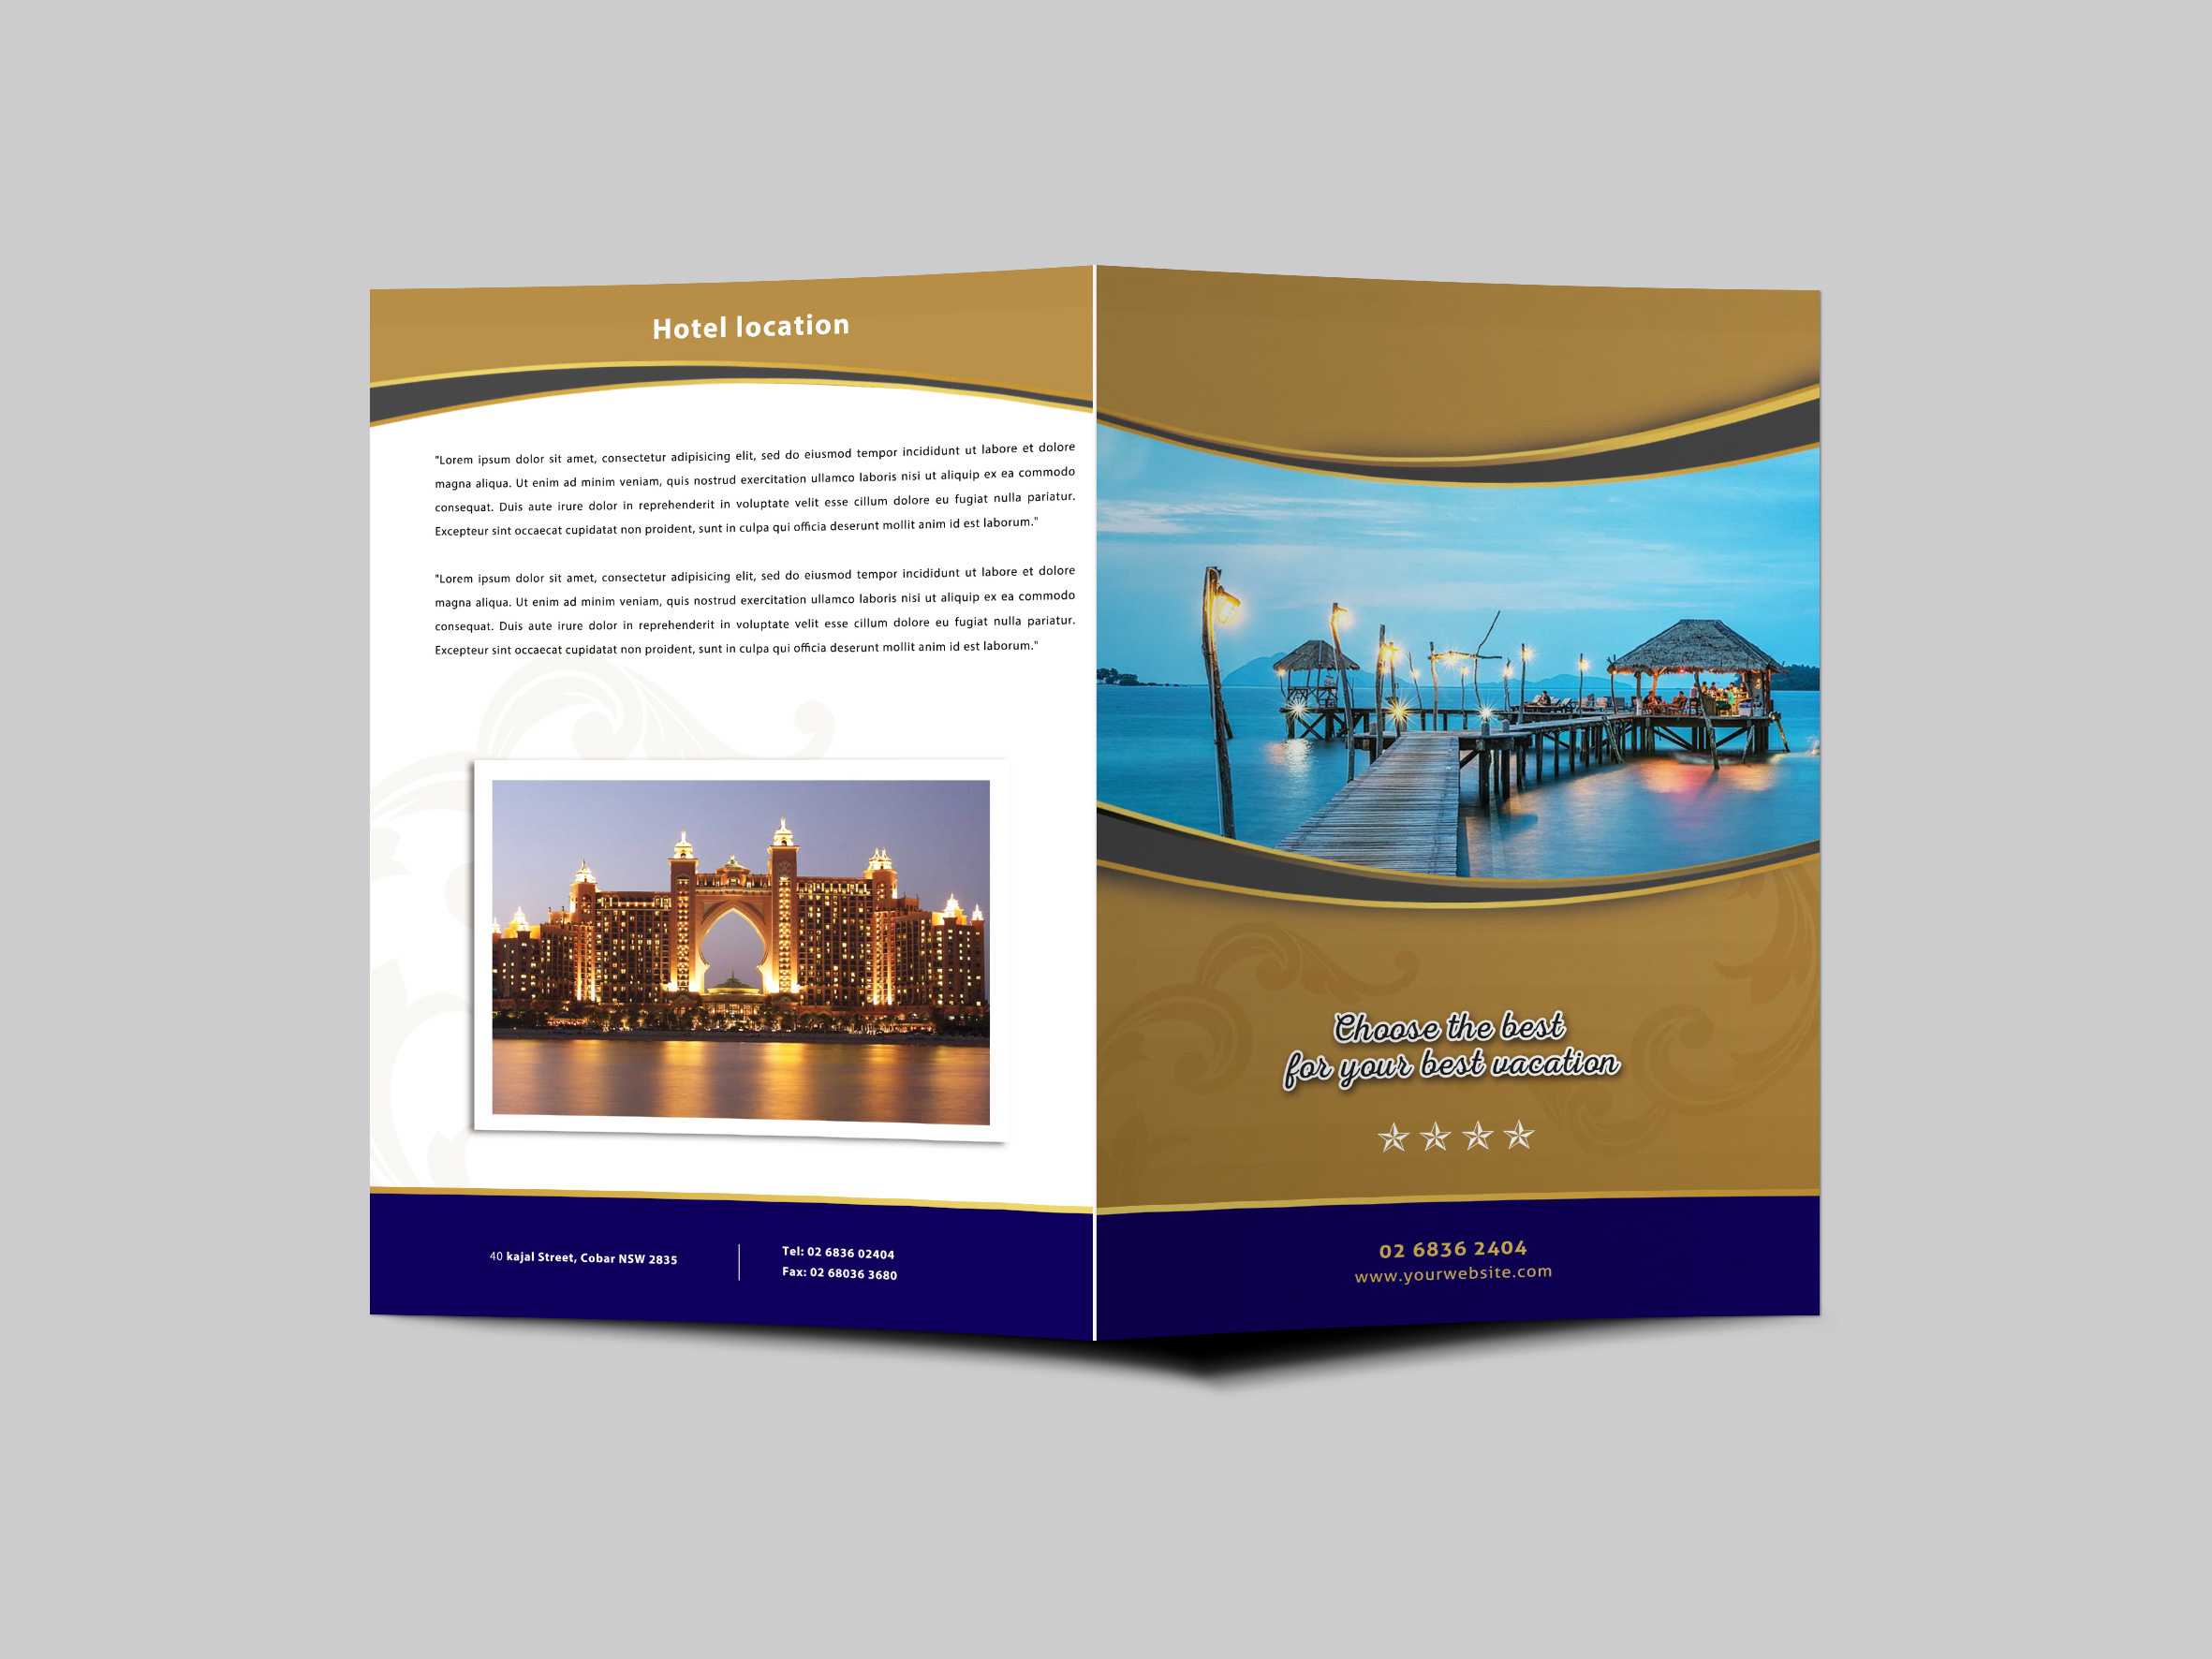 Hotel Resort Bi Fold Brochure Design Templatearun Kumar Pertaining To Hotel Brochure Design Templates